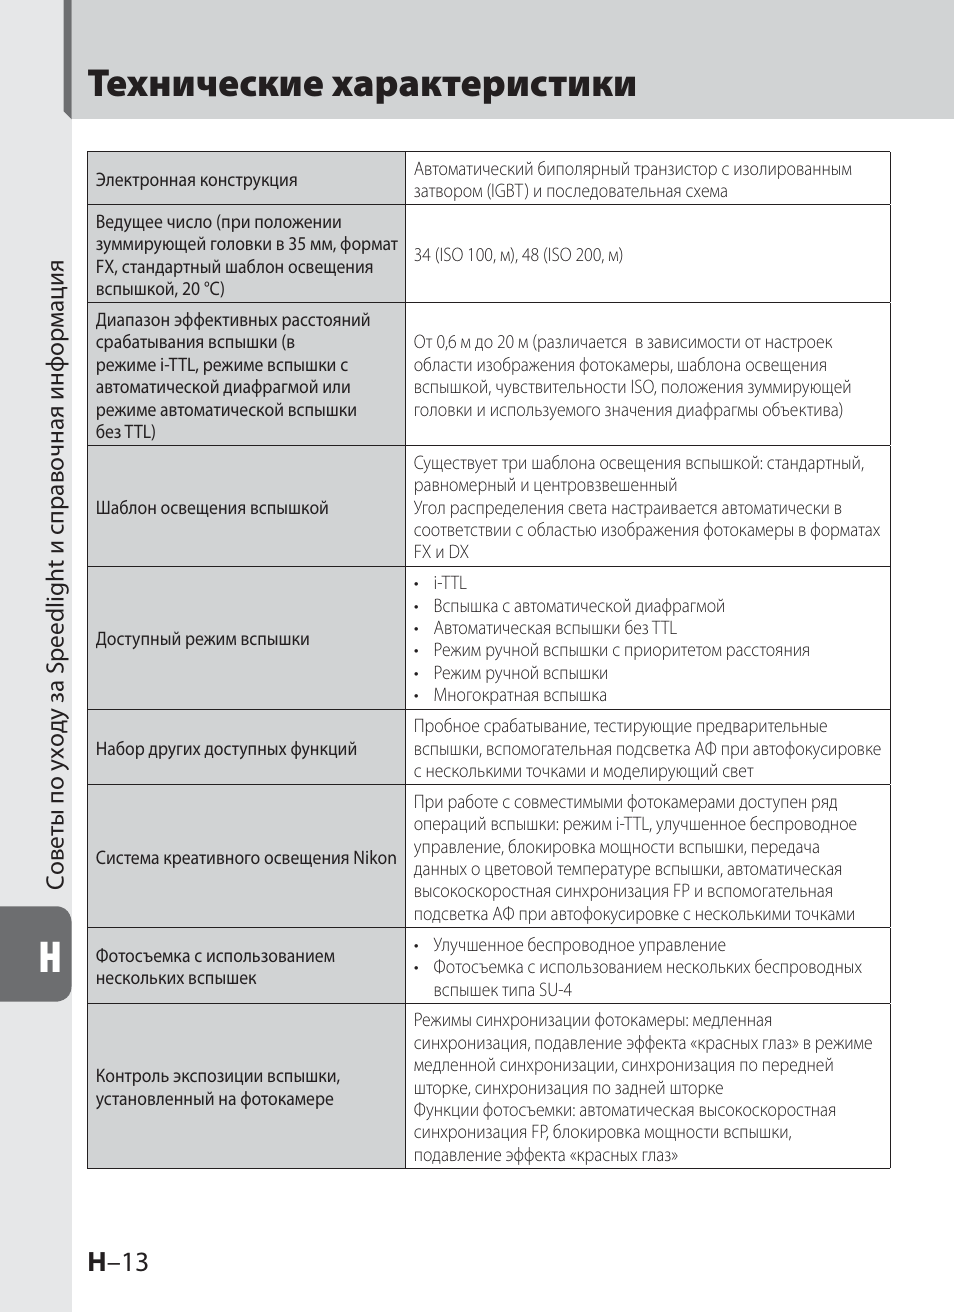 Технические характеристики, H –13 | Инструкция по эксплуатации Nikon SB-910 | Страница 124 / 136